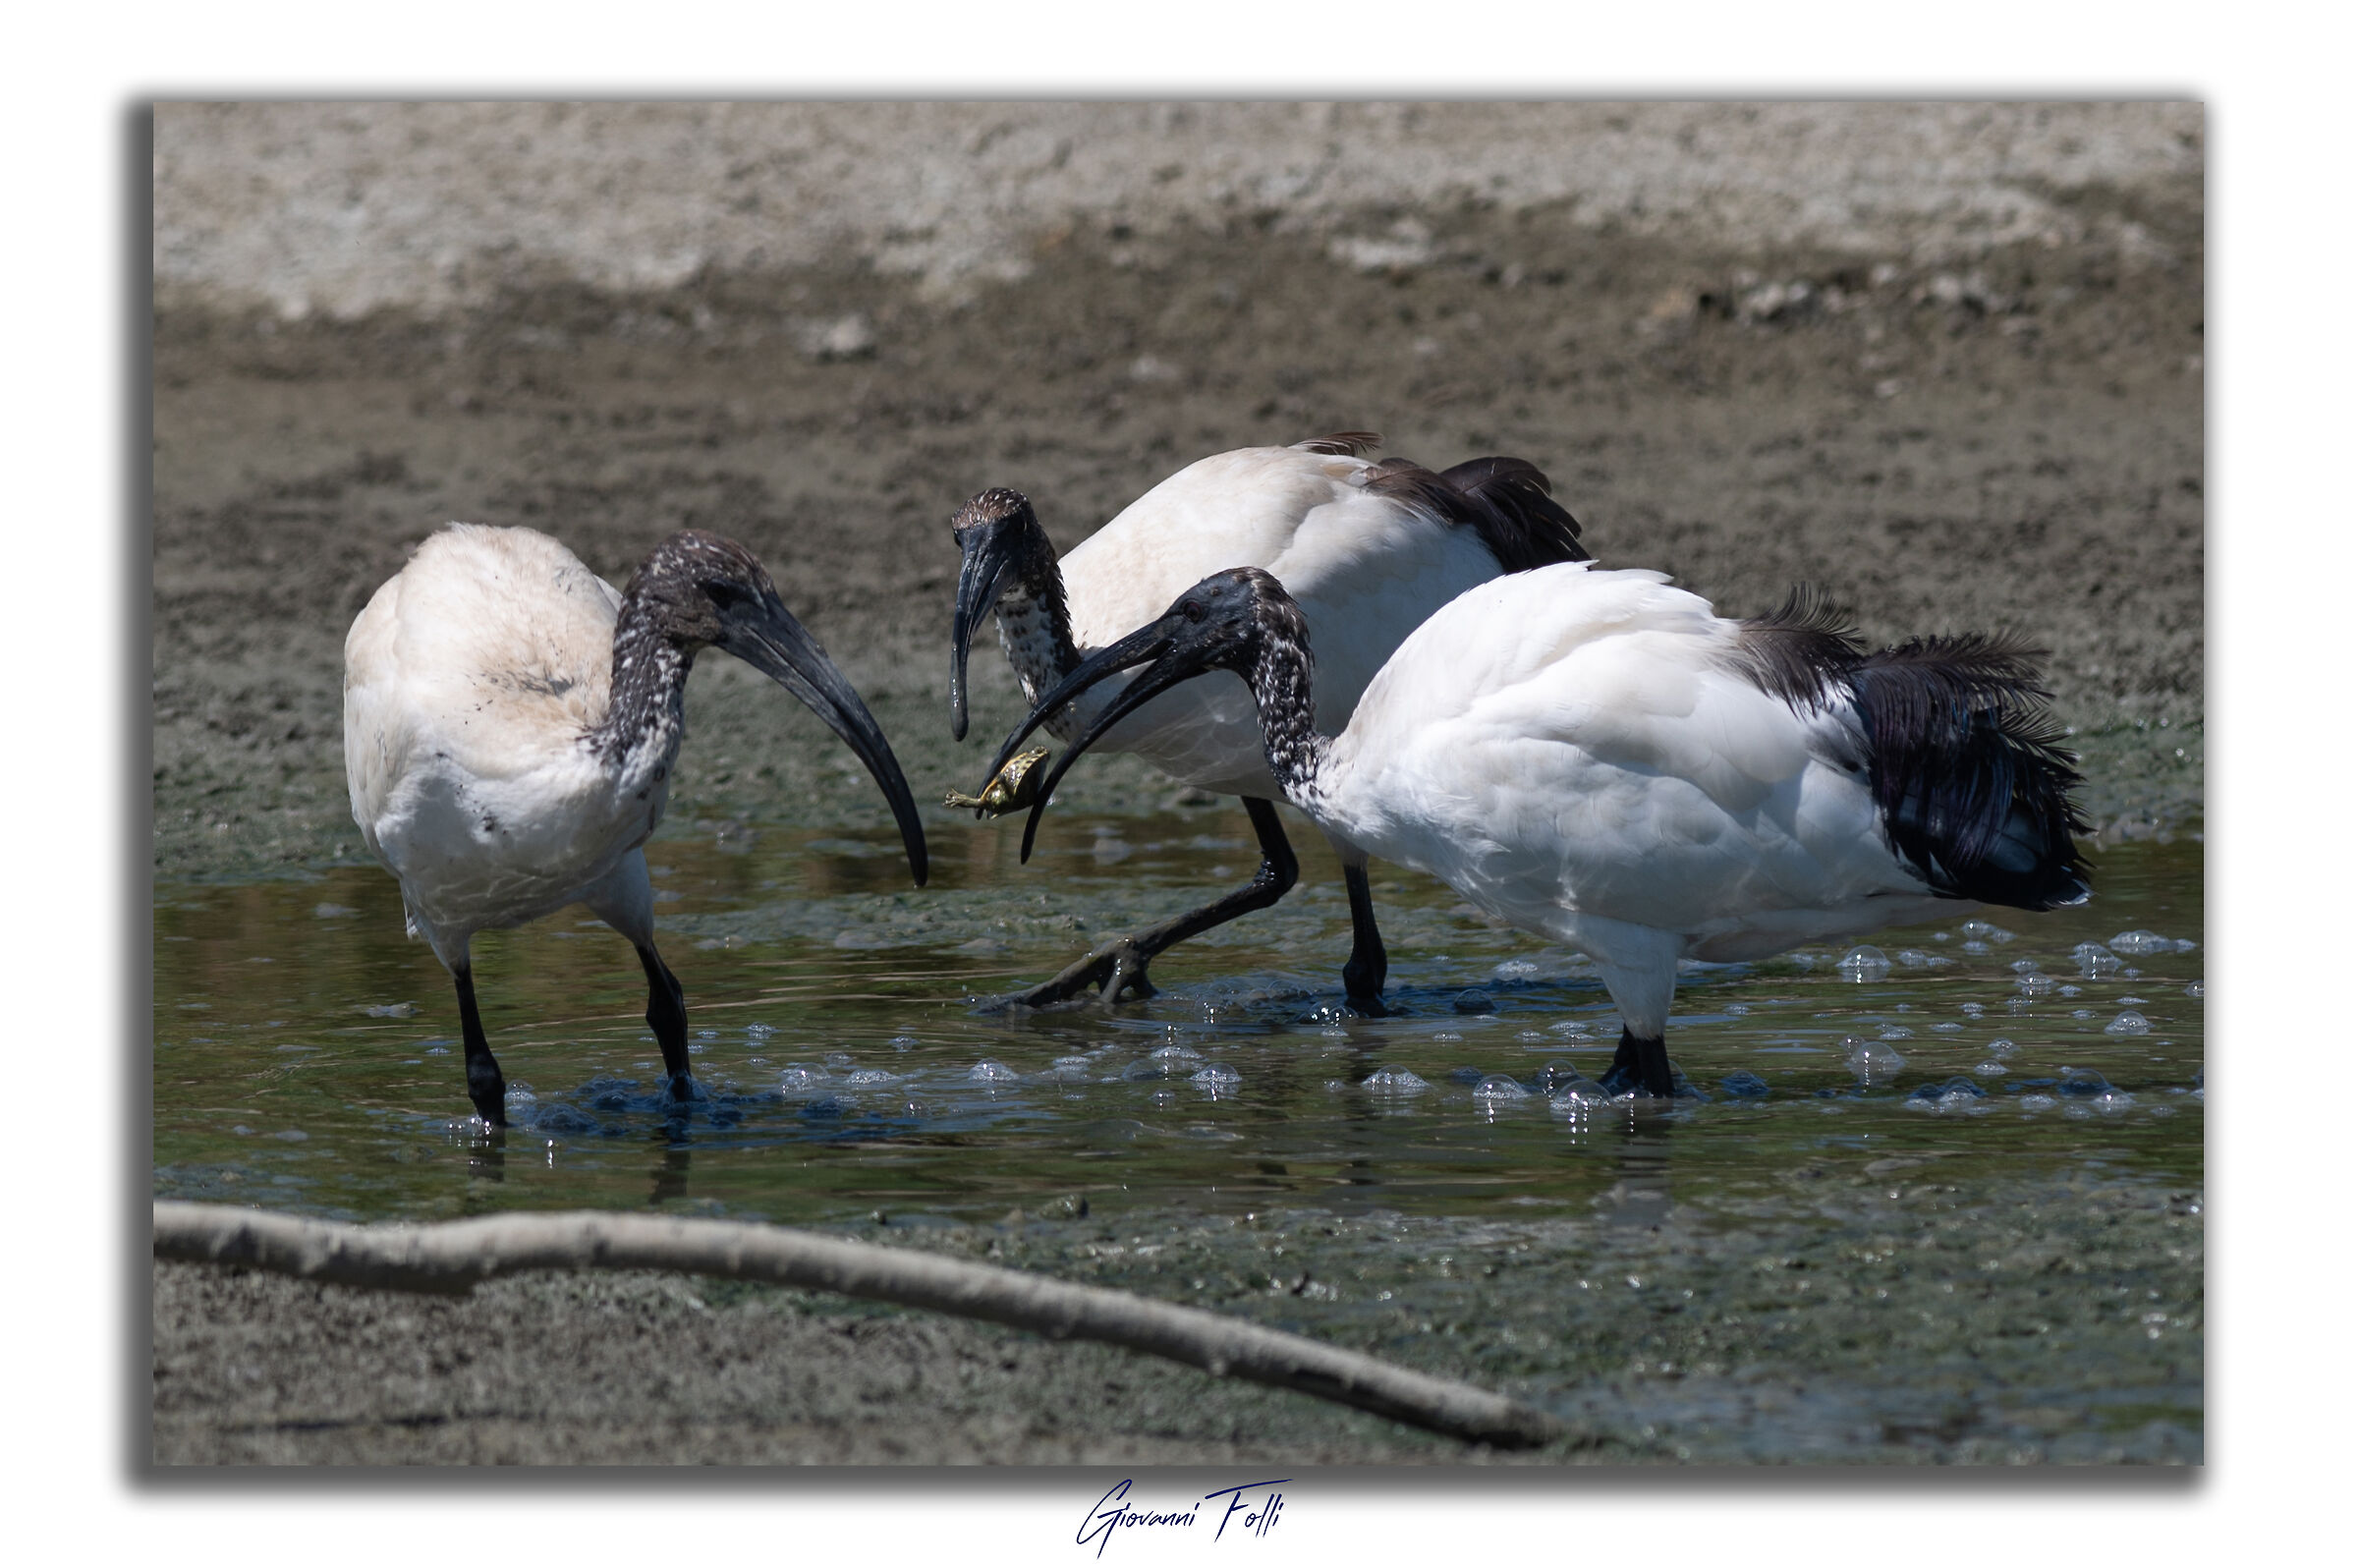 Parco della Piana - 3 ibis ed una tartarughina...